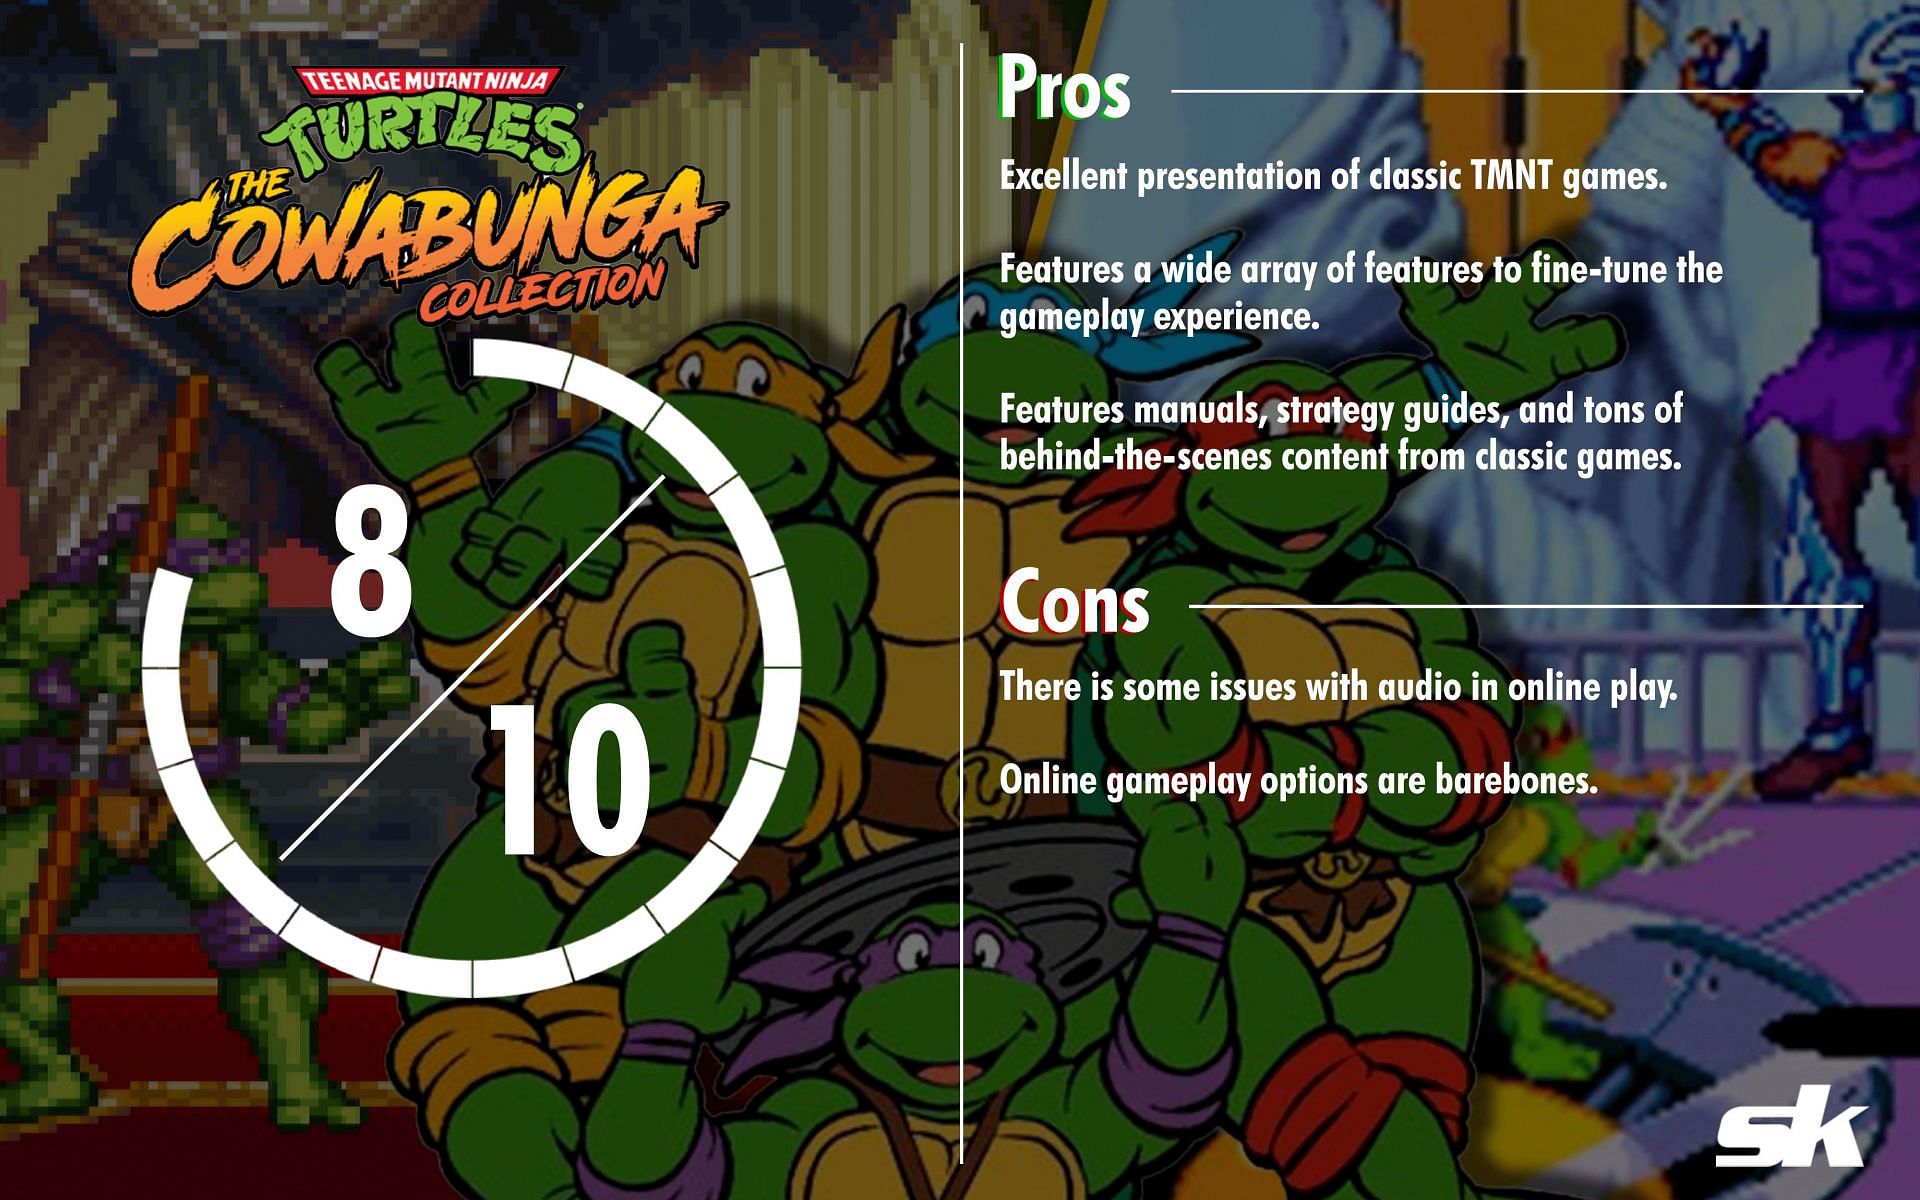 Cowabunga! Teenage Mutant Ninja Turtles join the Battleground of